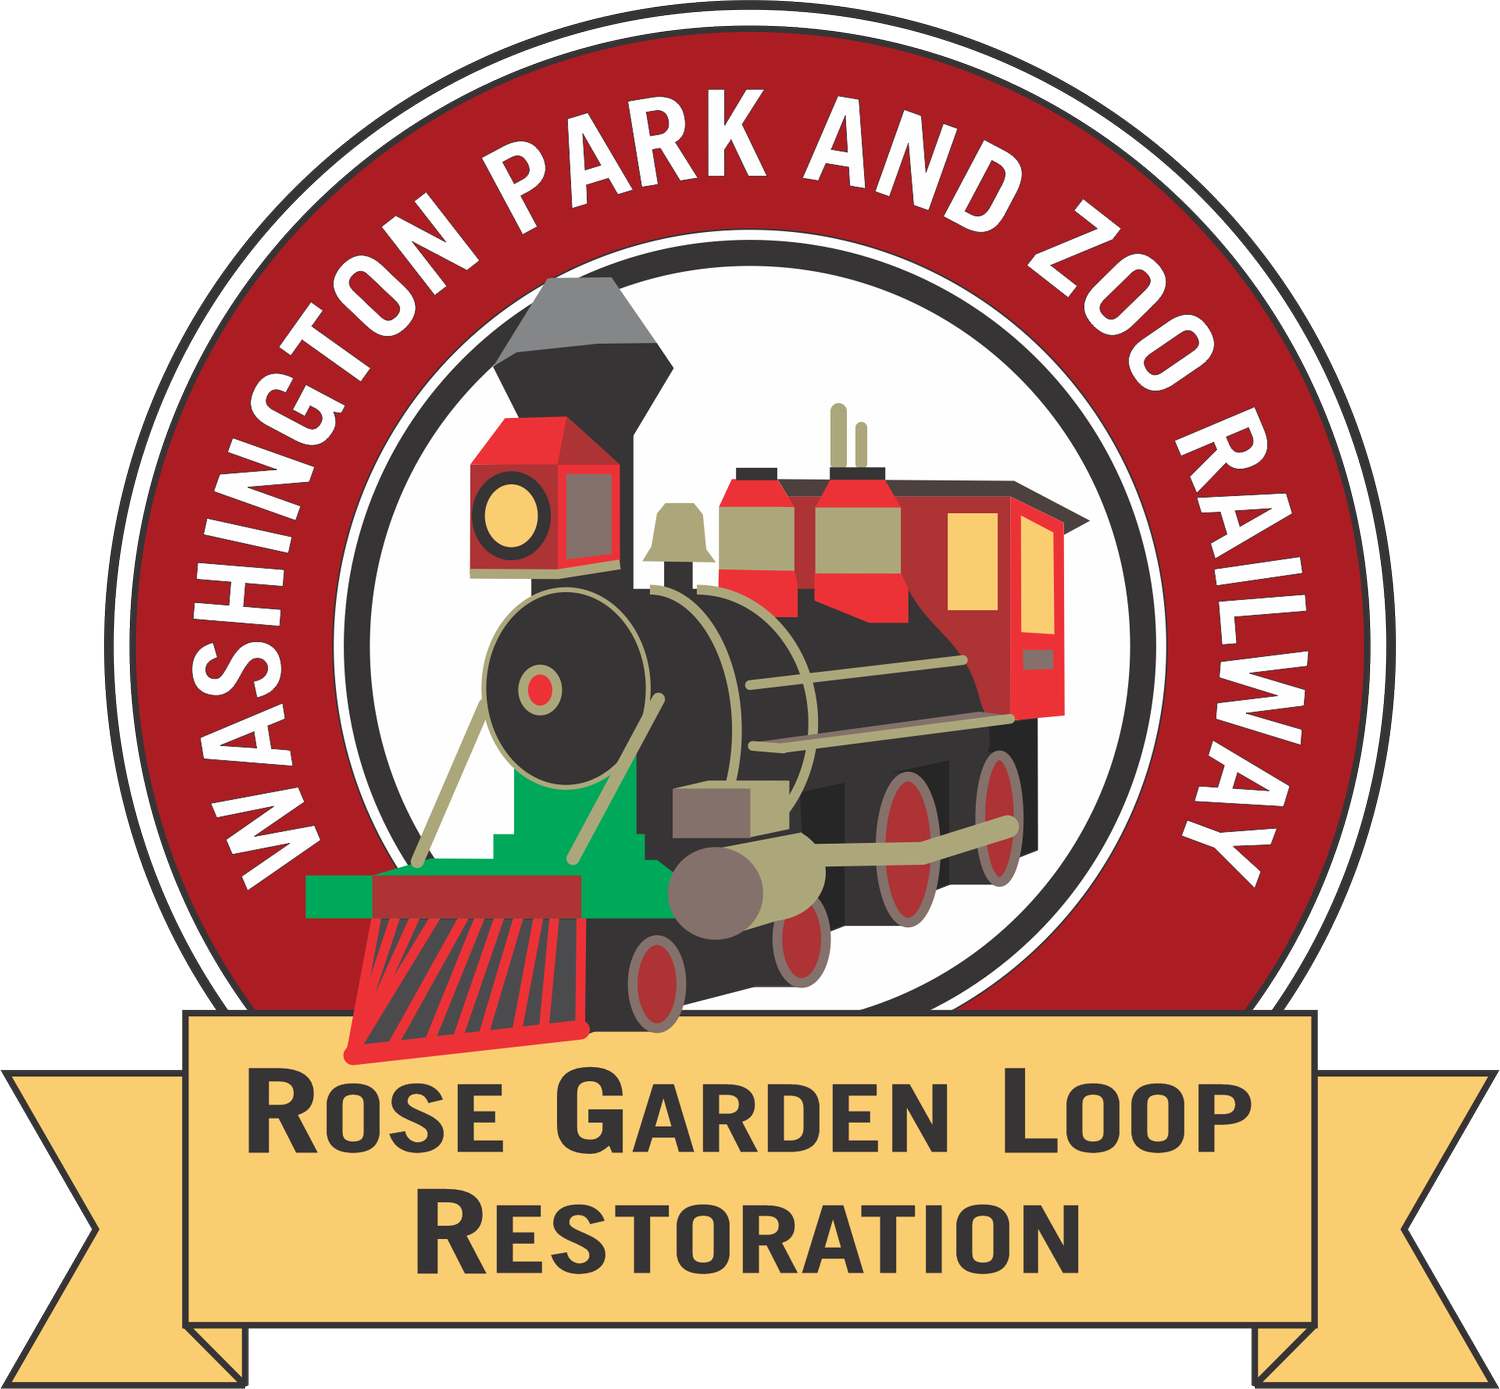 Friends Of Washington Park and Zoo Railway